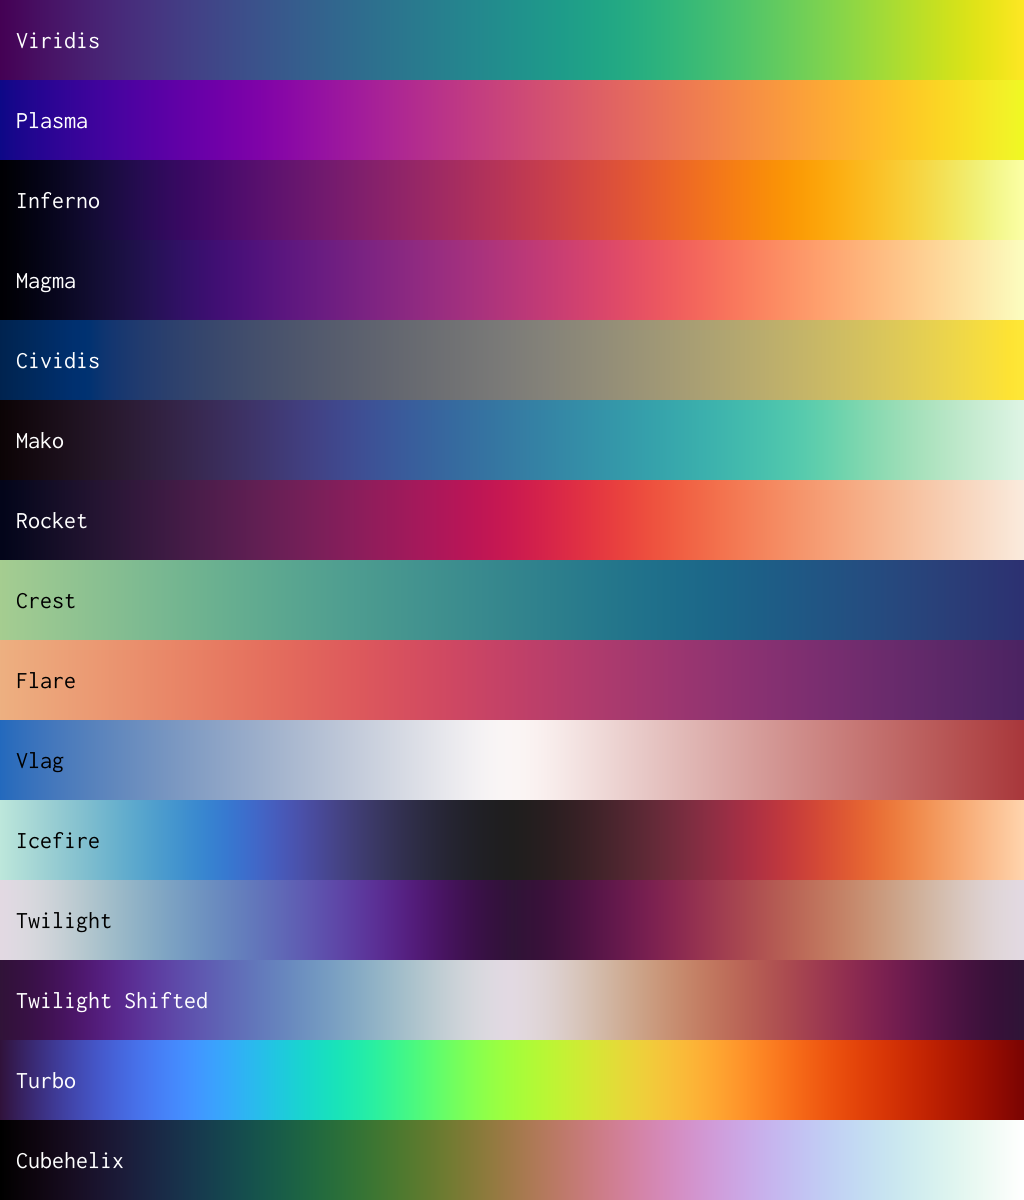 Perceptually uniform colourmaps from Unicolour.Datasets, created with Unicolour